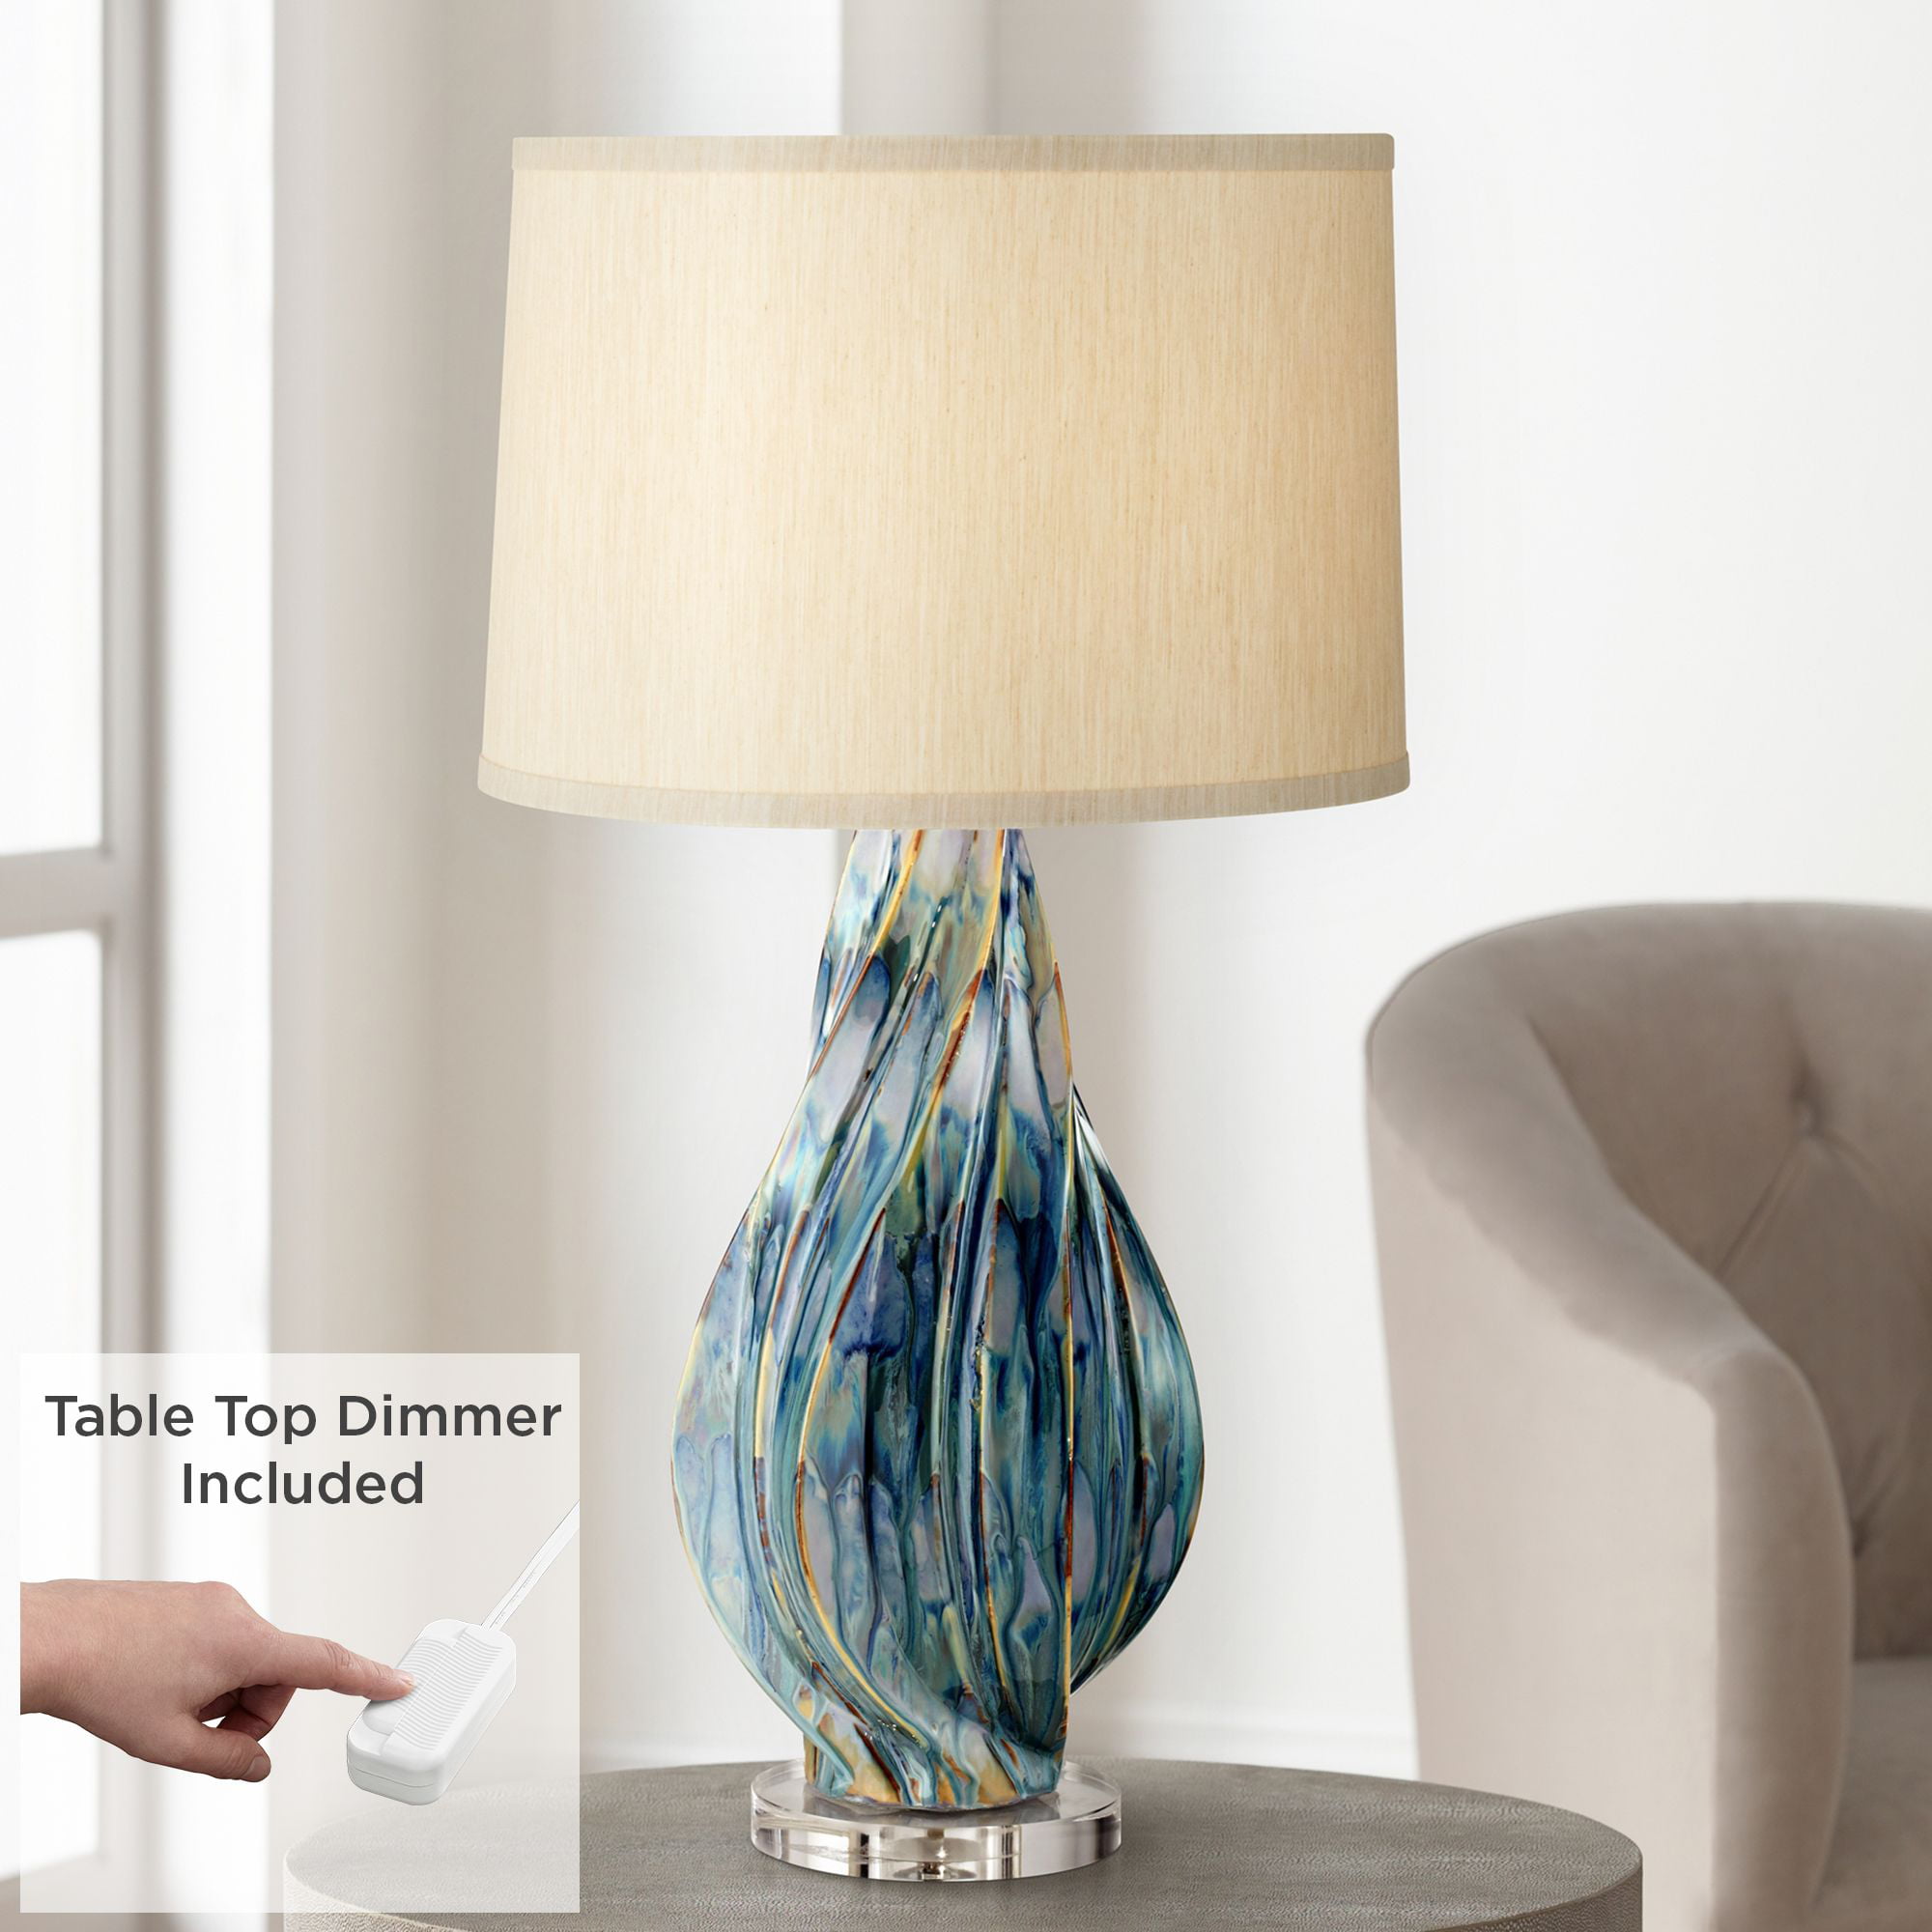 Possini Euro Design Contemporary Table, Teal Blue Table Lamp Shade